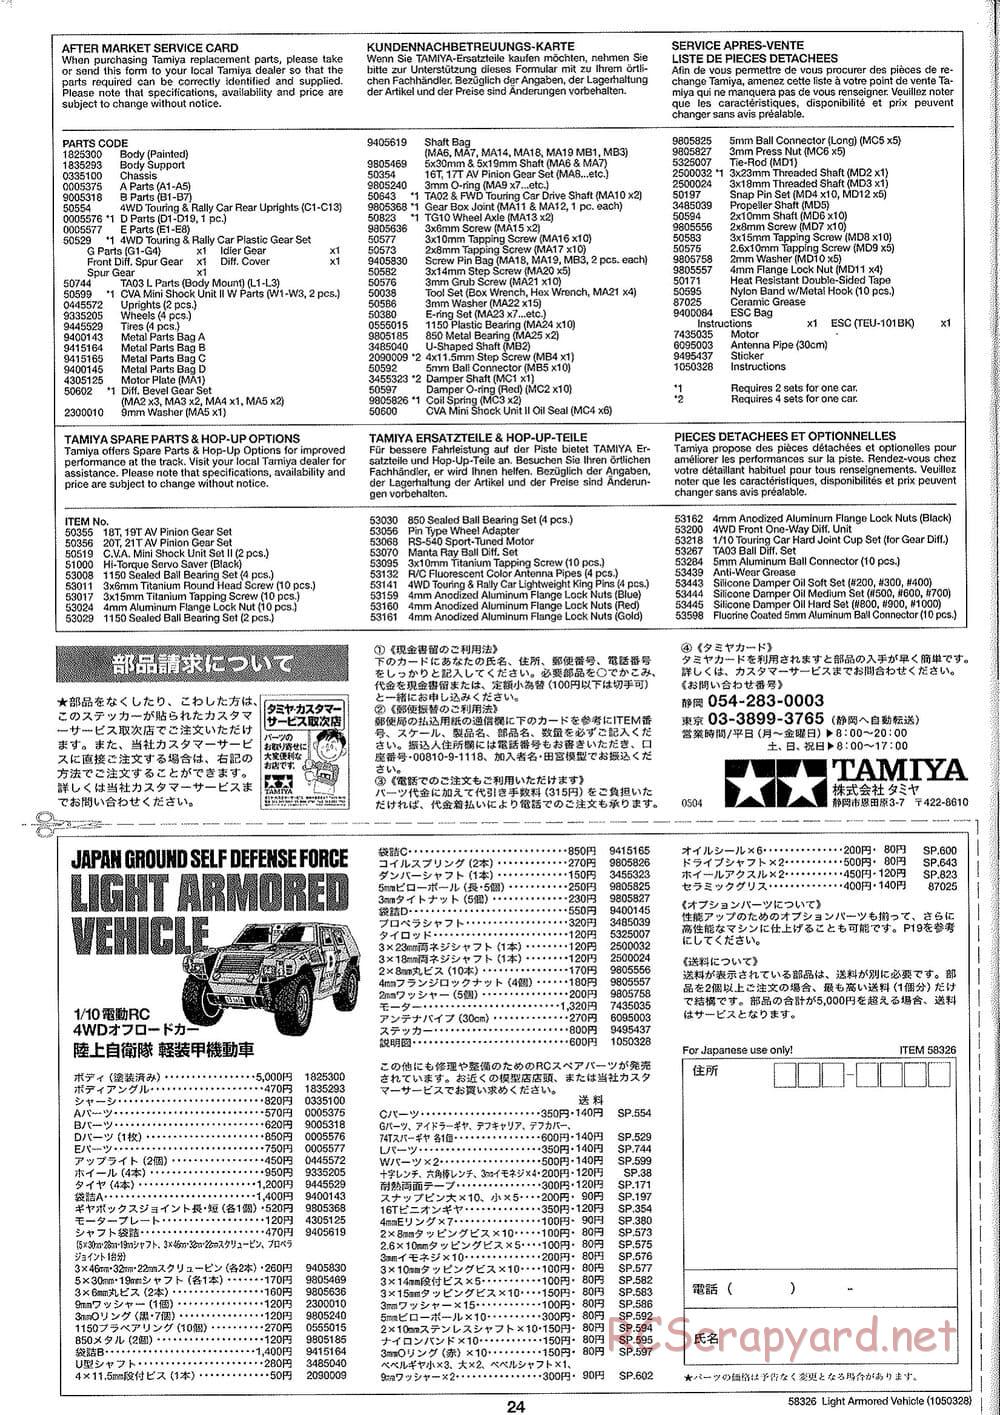 Tamiya - JGSDF Light Armored Vehicle - TA-01 Chassis - Manual - Page 24